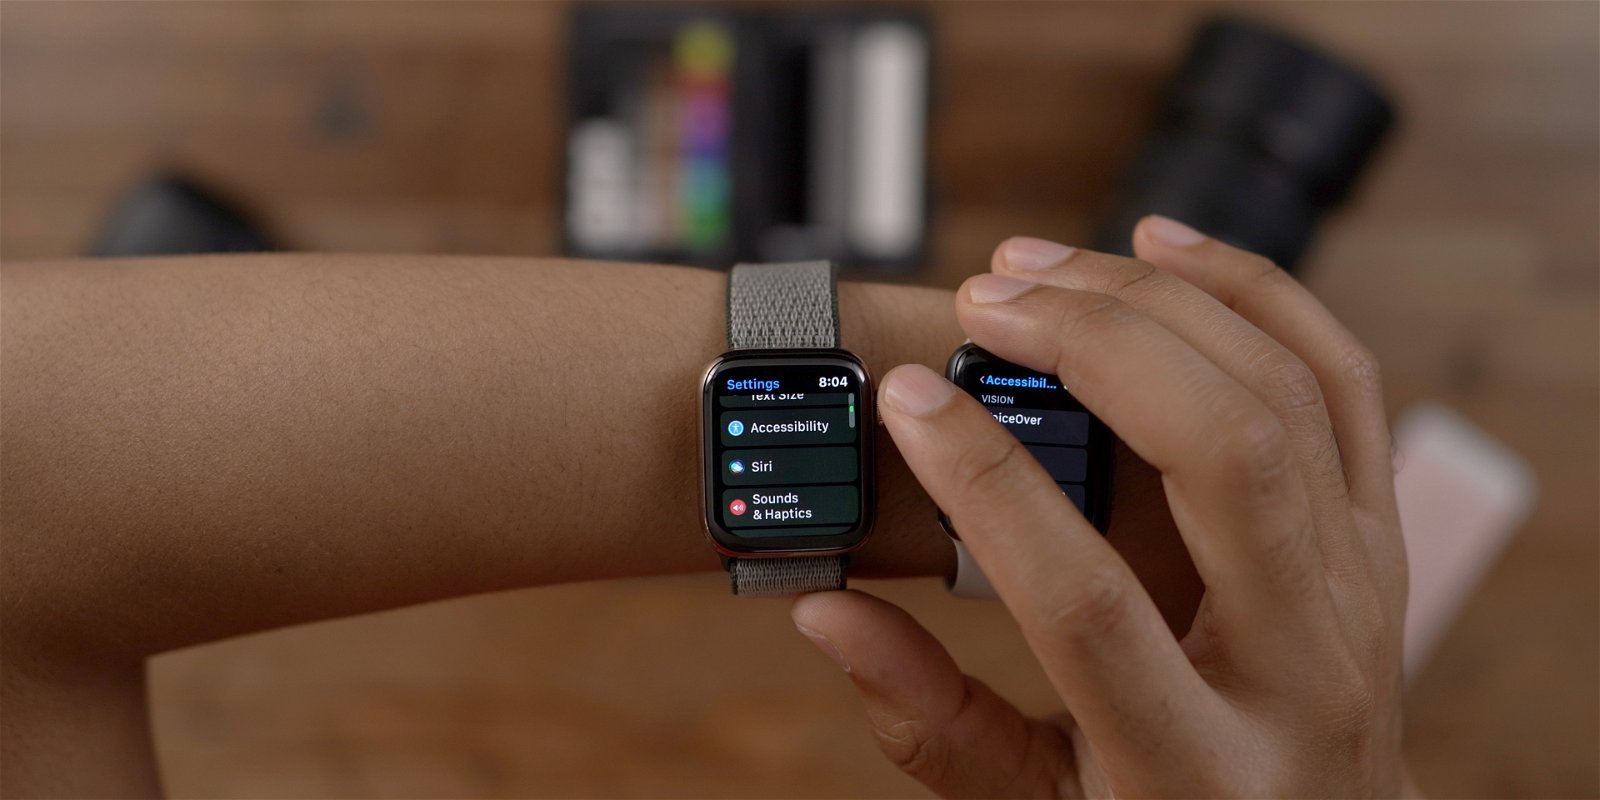 Apple Watch con watchOS 6